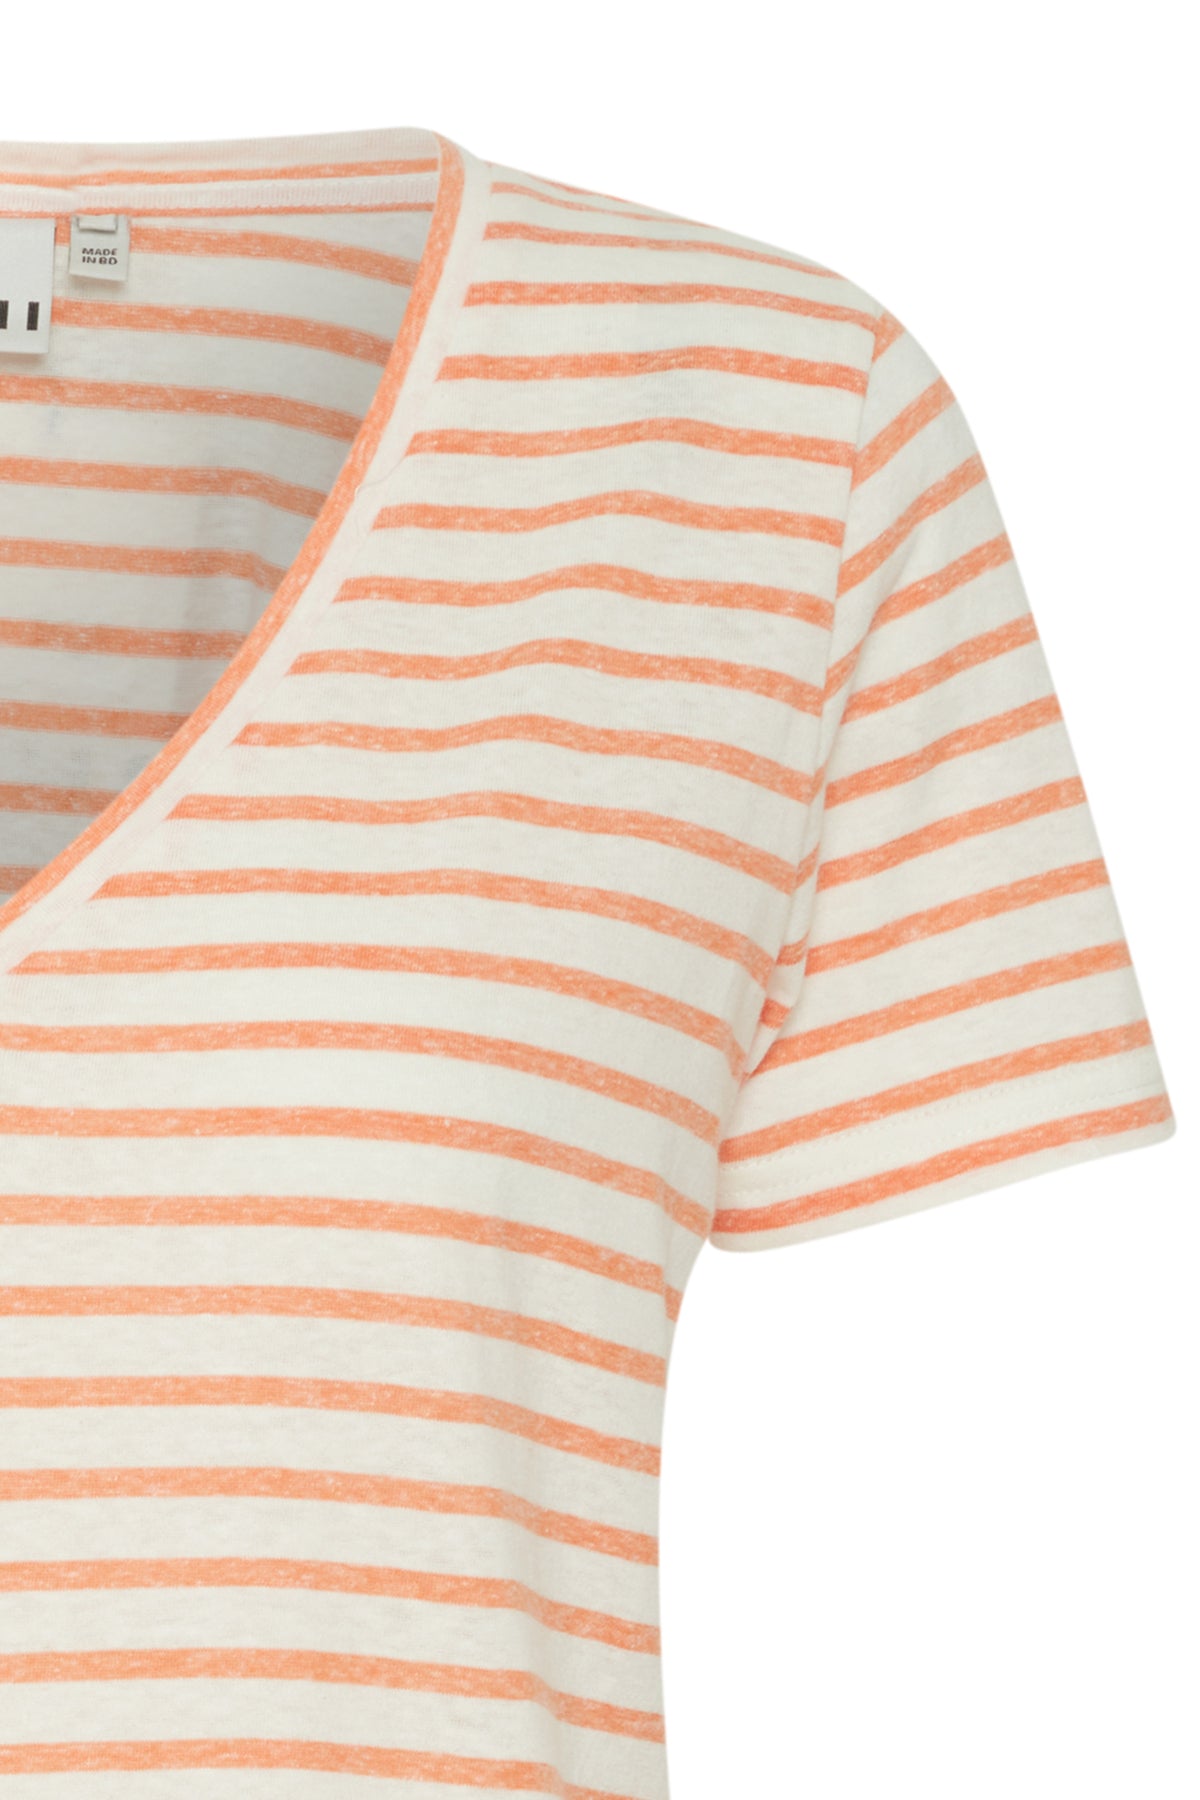 Camiseta ICHI Yulieta Coral Rose Stripes